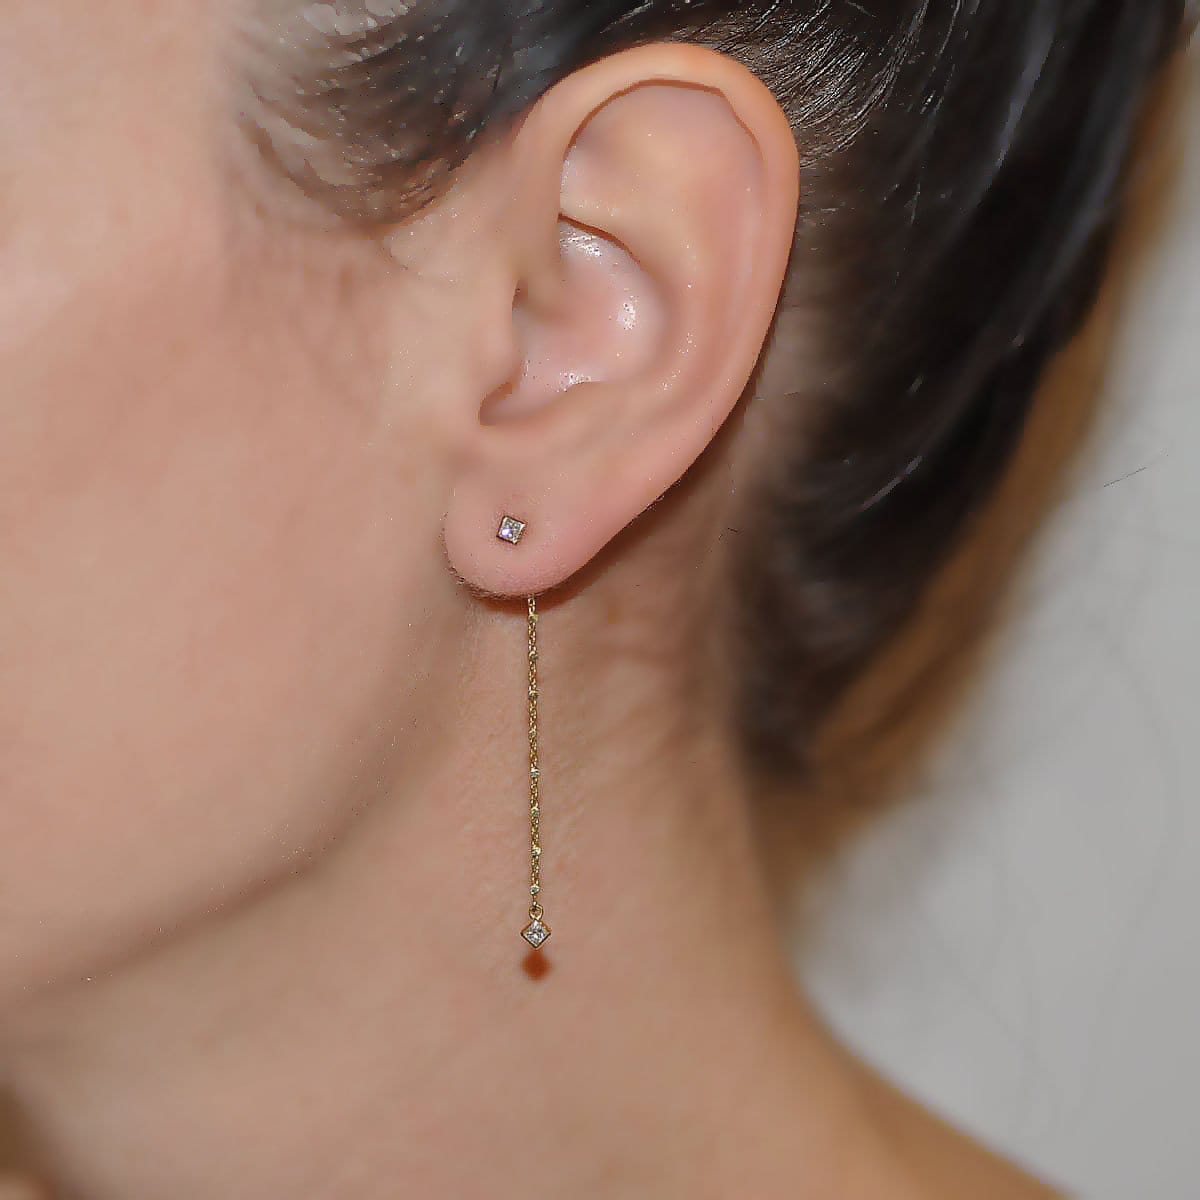 Diamond Drop Gold Earring Enhancers